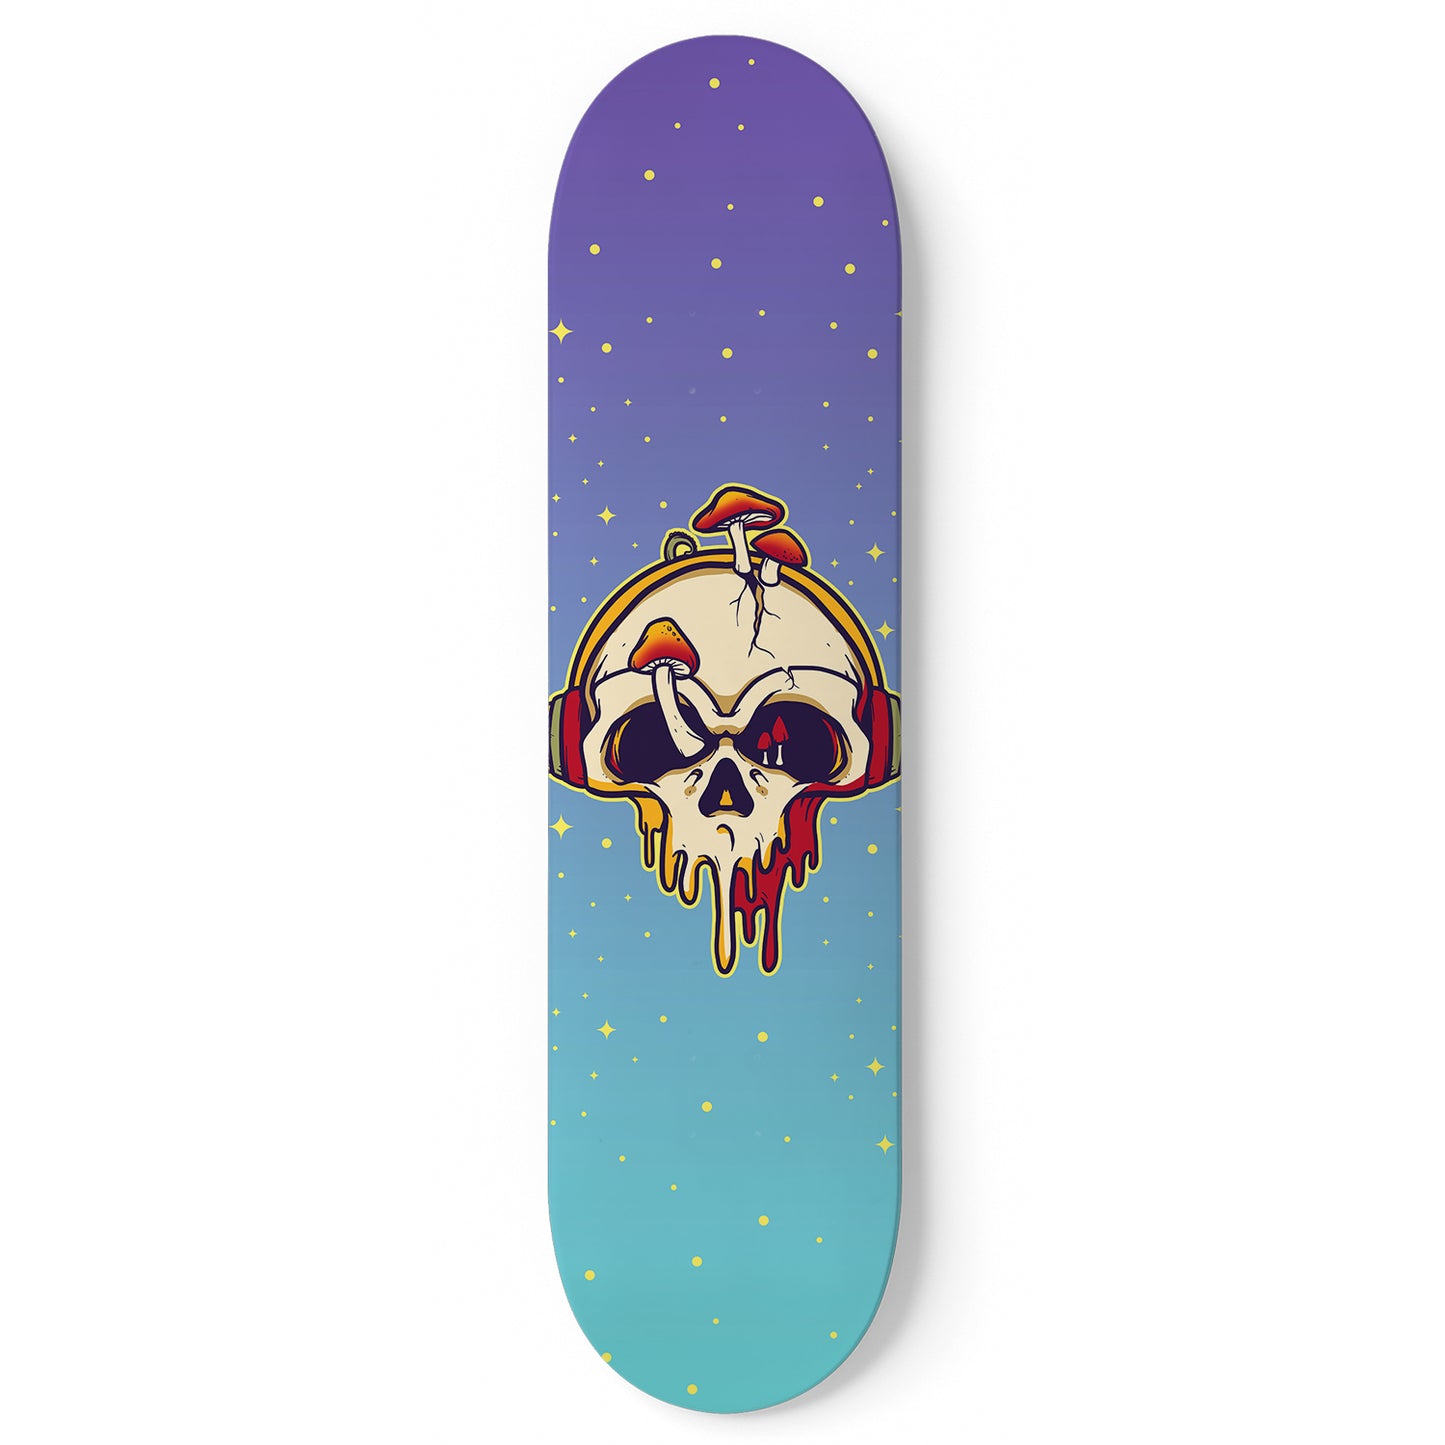 Beats and Skull Skateboard Wall Art